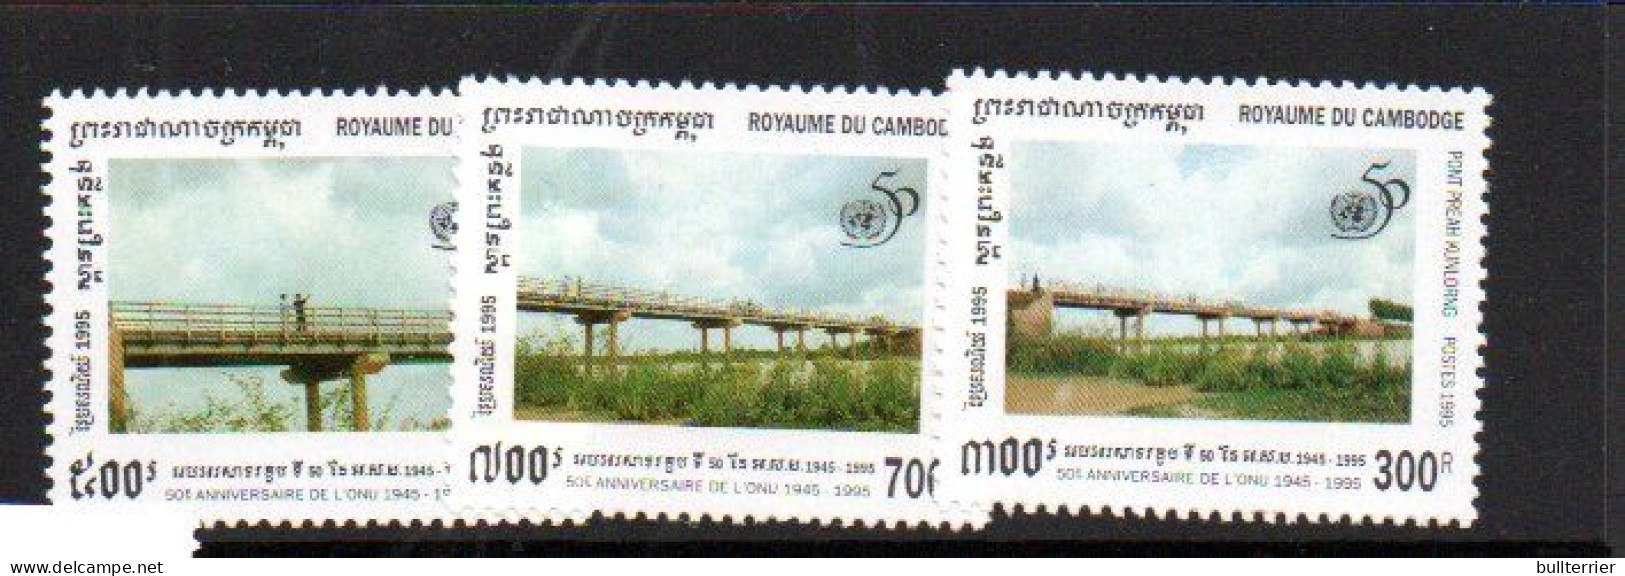 CAMBODIA -  1995 - UNITED NATIONS / BRIDGES SET OF 3 MINT NEVER HINGED - Cambogia